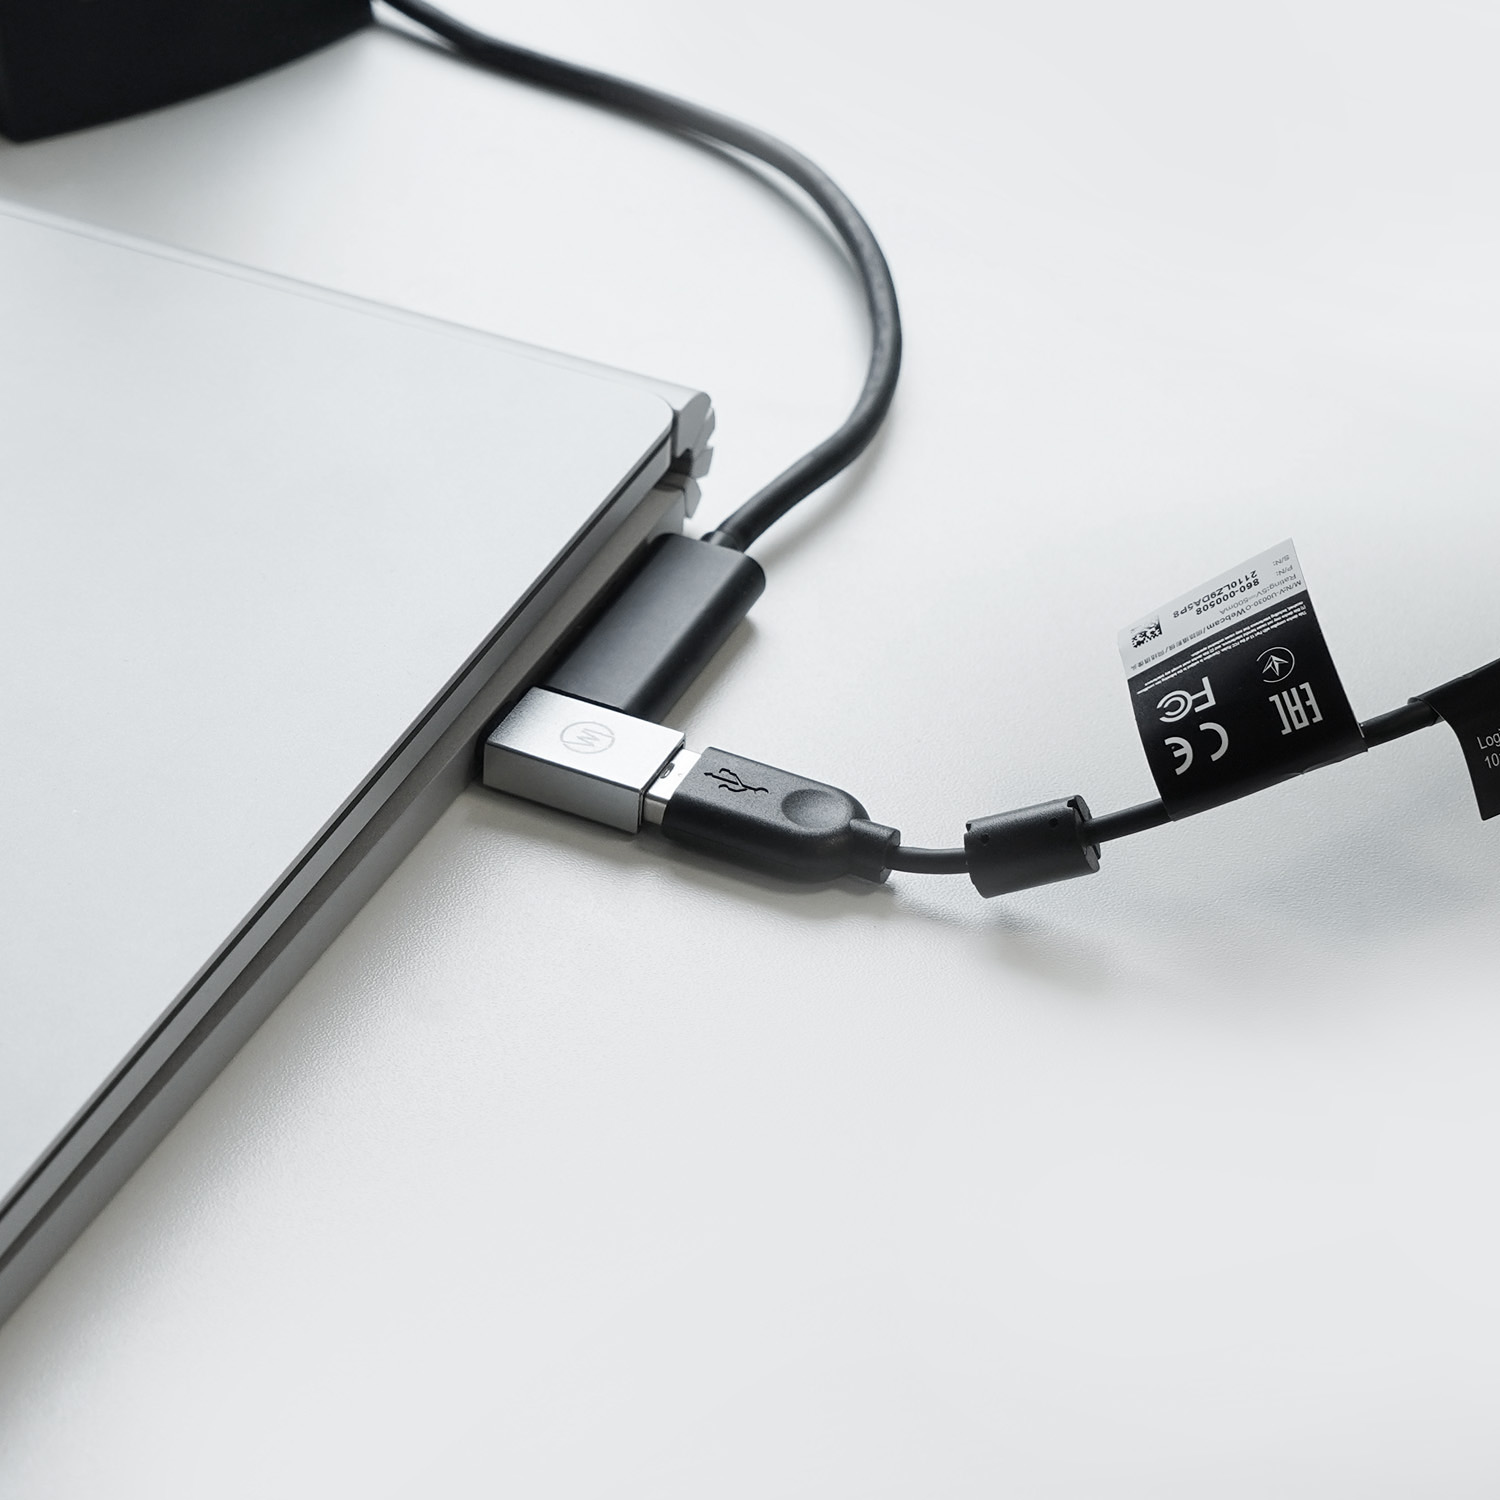 USB und Teaisiy, Jelly-Comb, Adapter Nulaxy WICKED mit Laptop HD CHILI Logitech, Adapter für Webcams Universal für USB-C